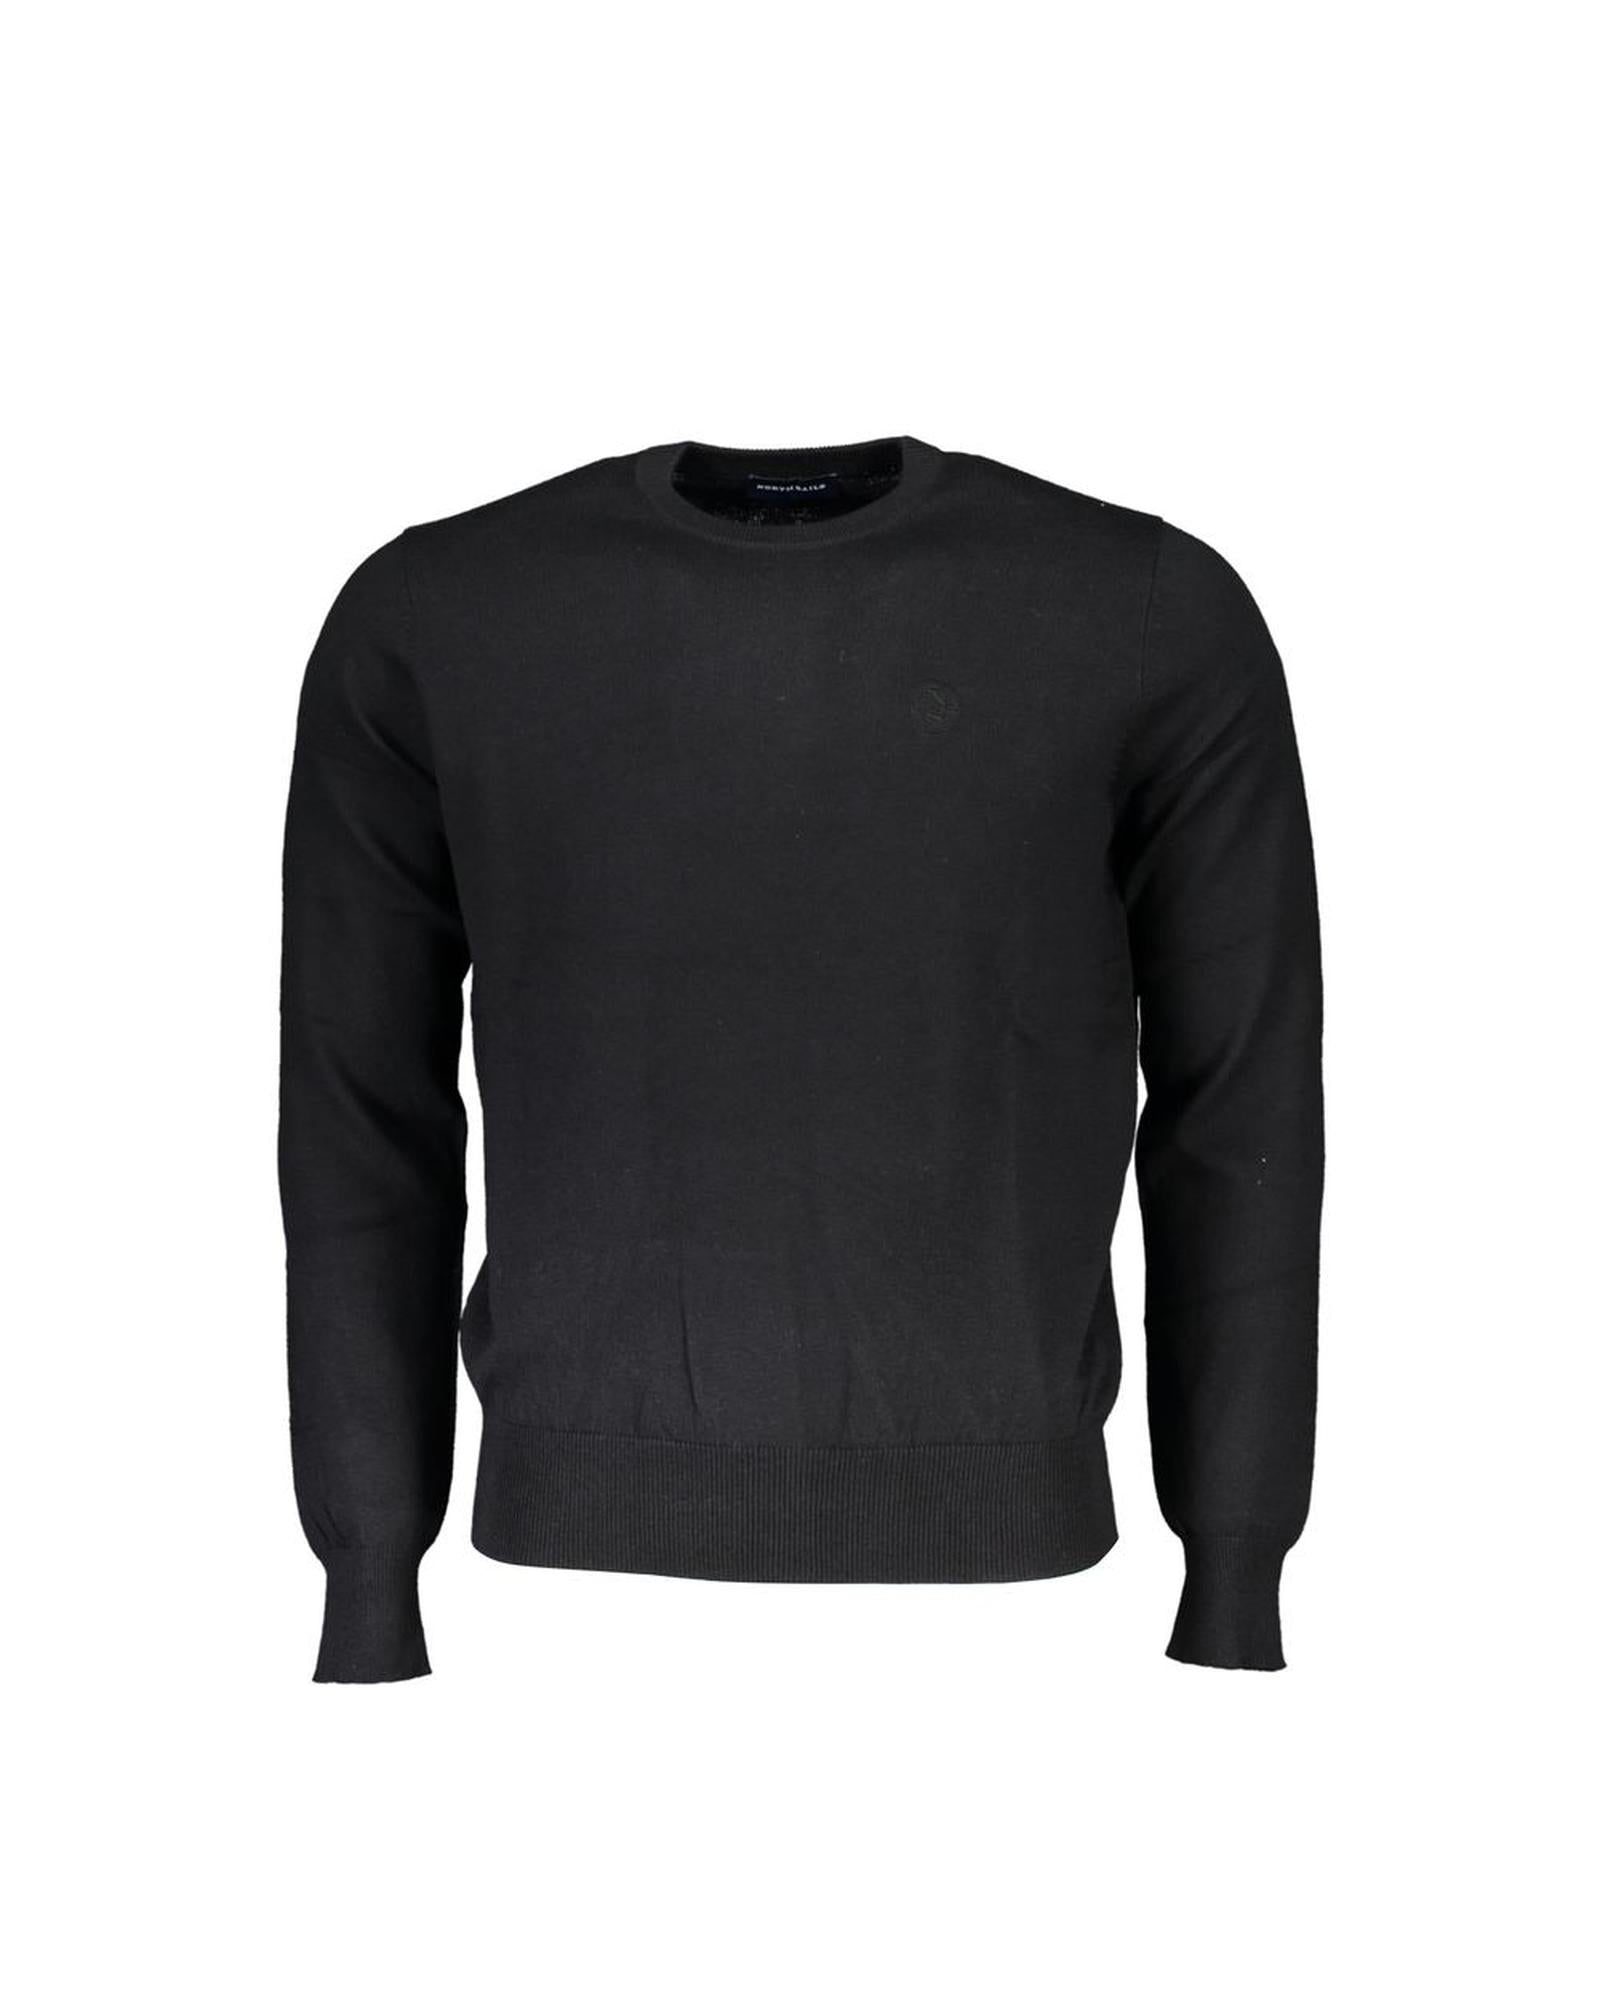 Men's Black Fabric Shirt - M